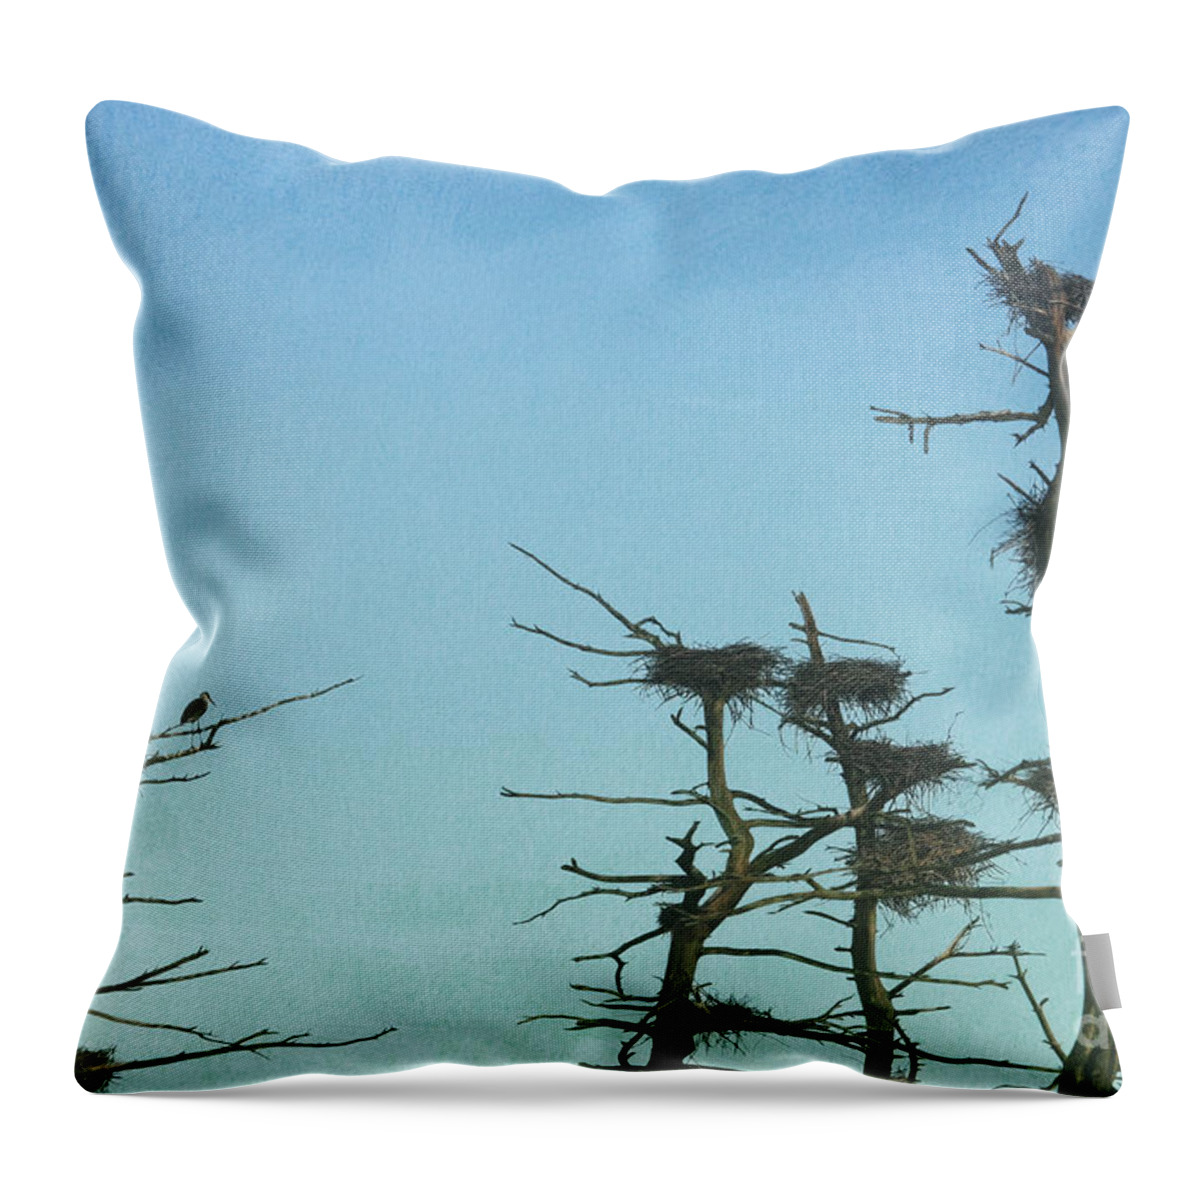 Herons Throw Pillow featuring the photograph Heron Condos by Jayne Carney